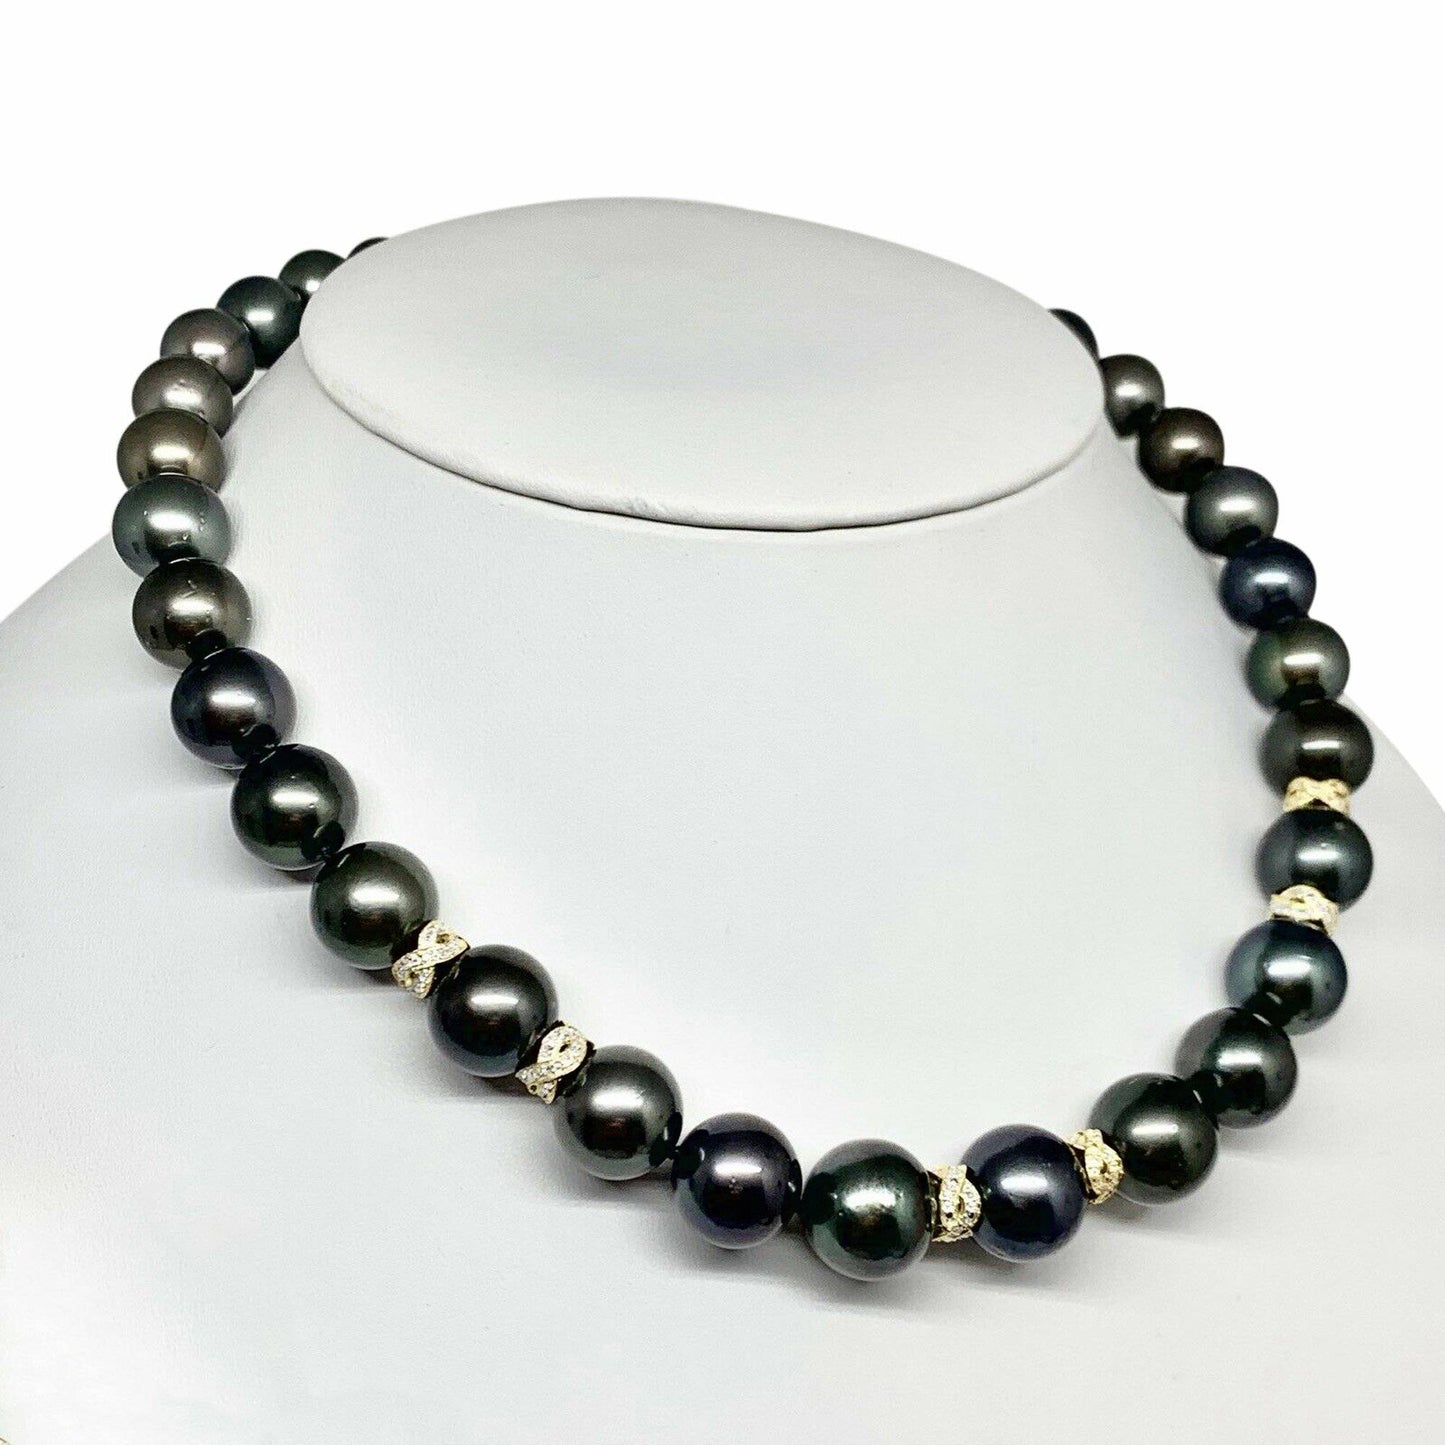 Diamond Tahitian Pearl Necklace 18k Gold 13.07 mm 17" Certified $26,250 914435 - Certified Estate Jewelry